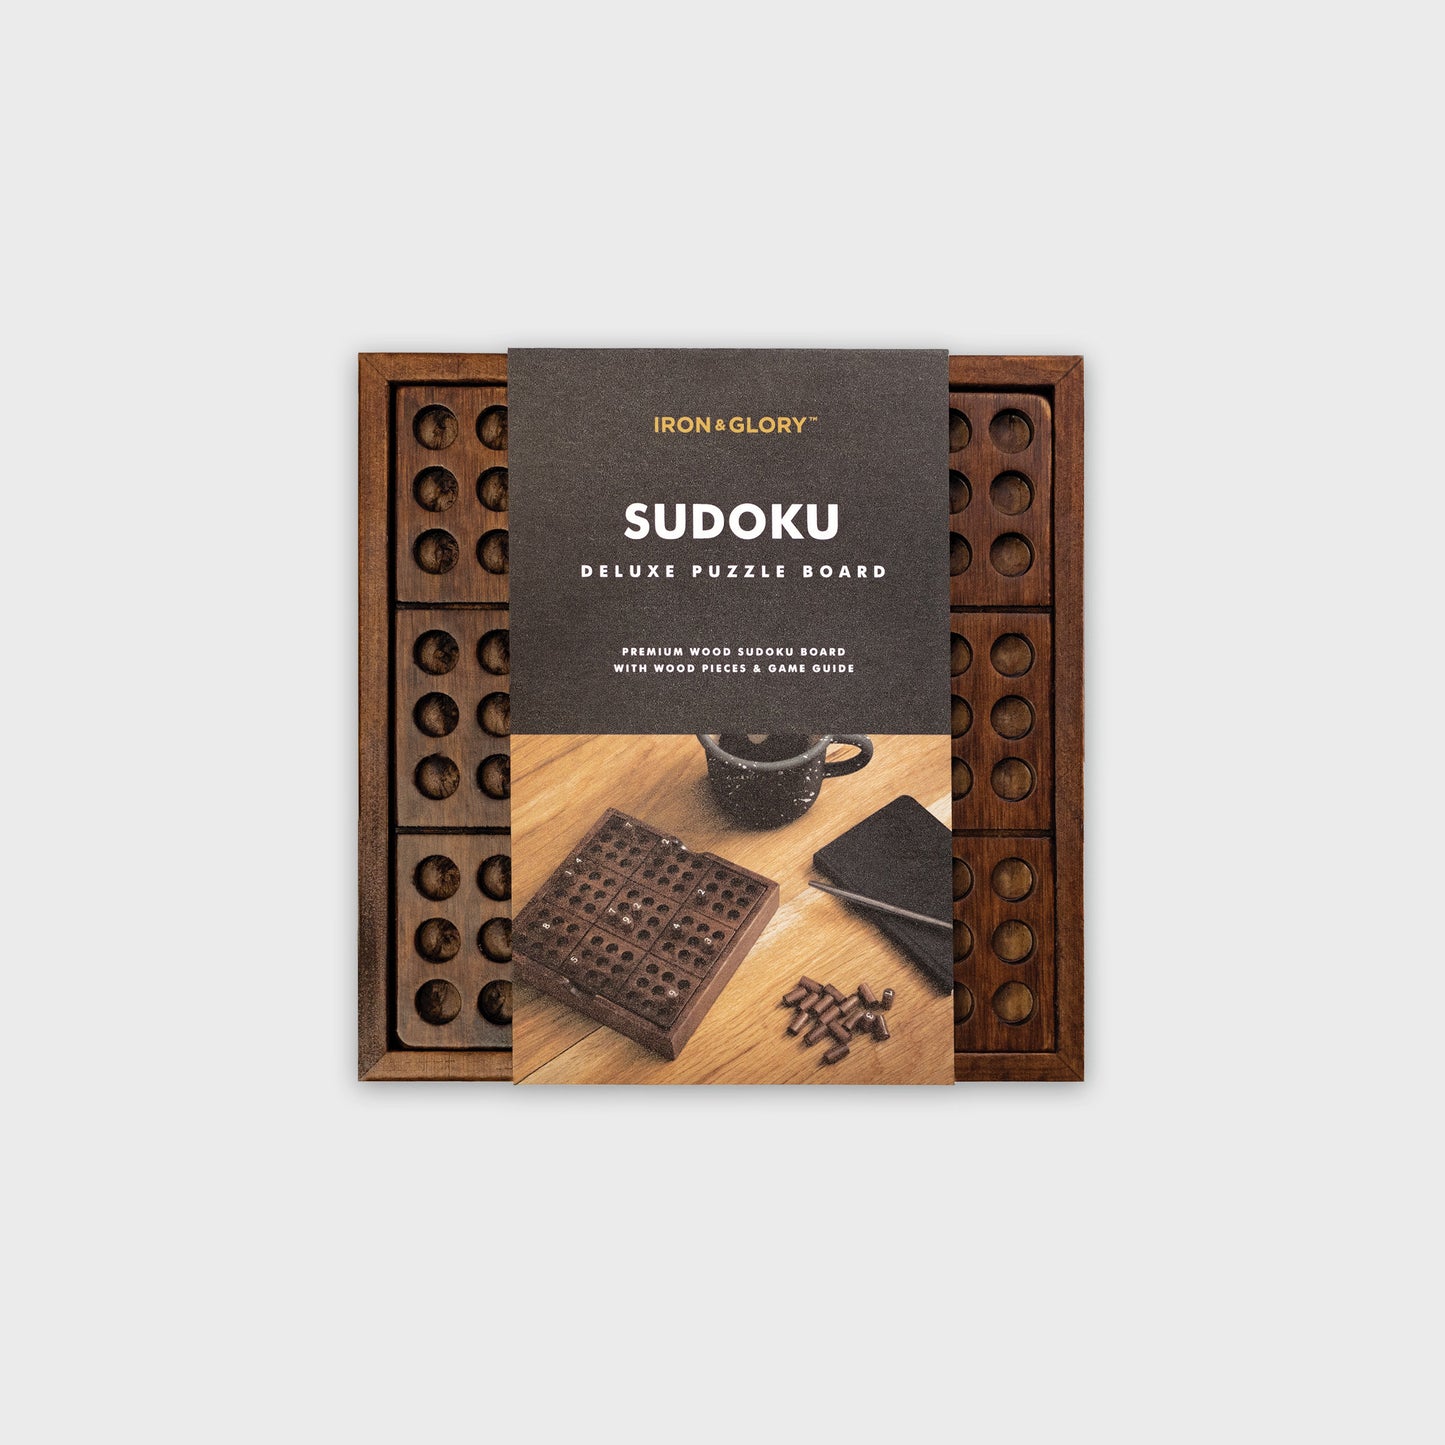 Deluxe Sudoku